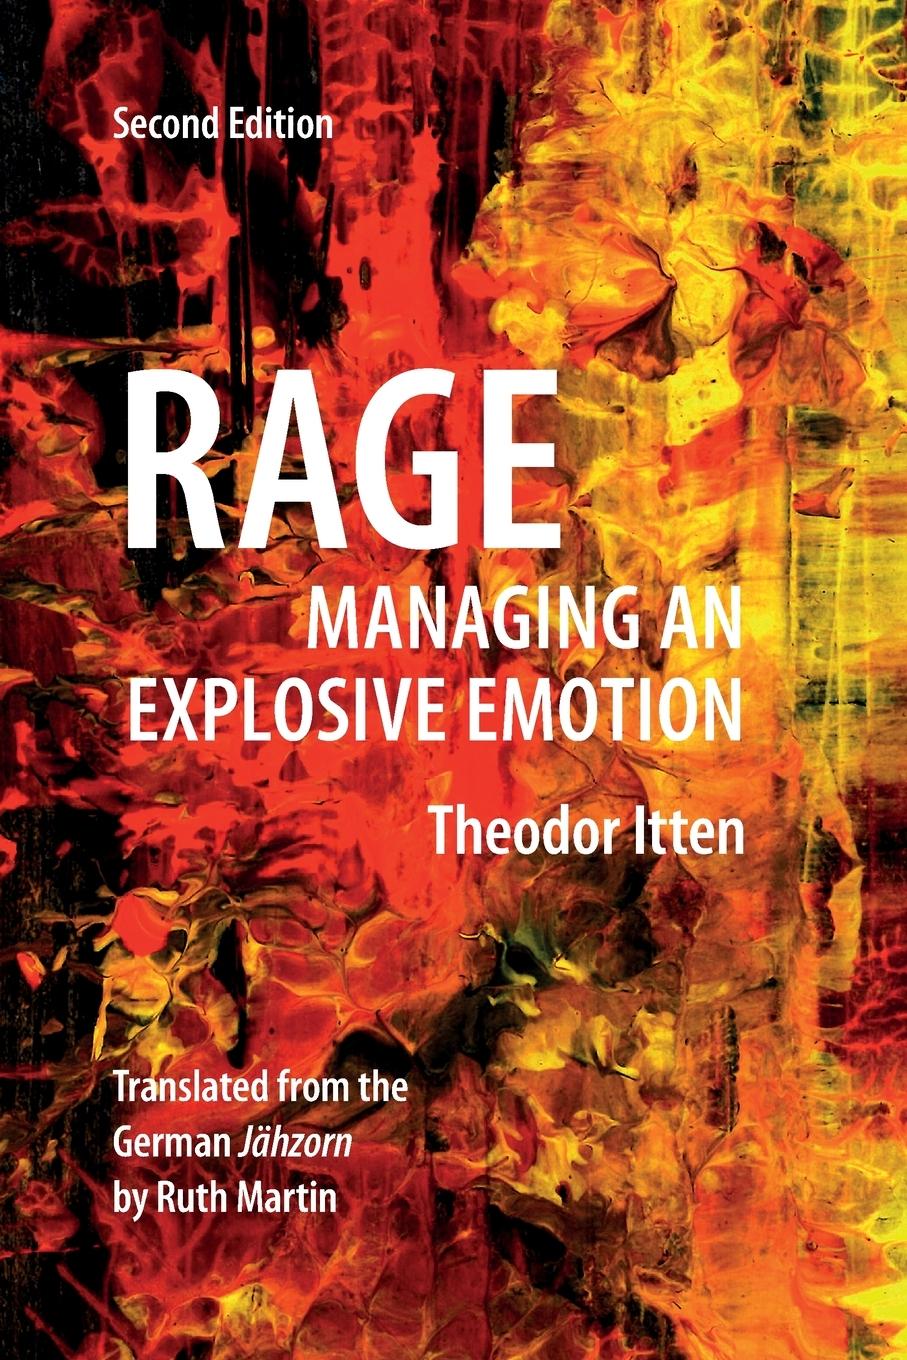 Kniha Rage Theodor Itten